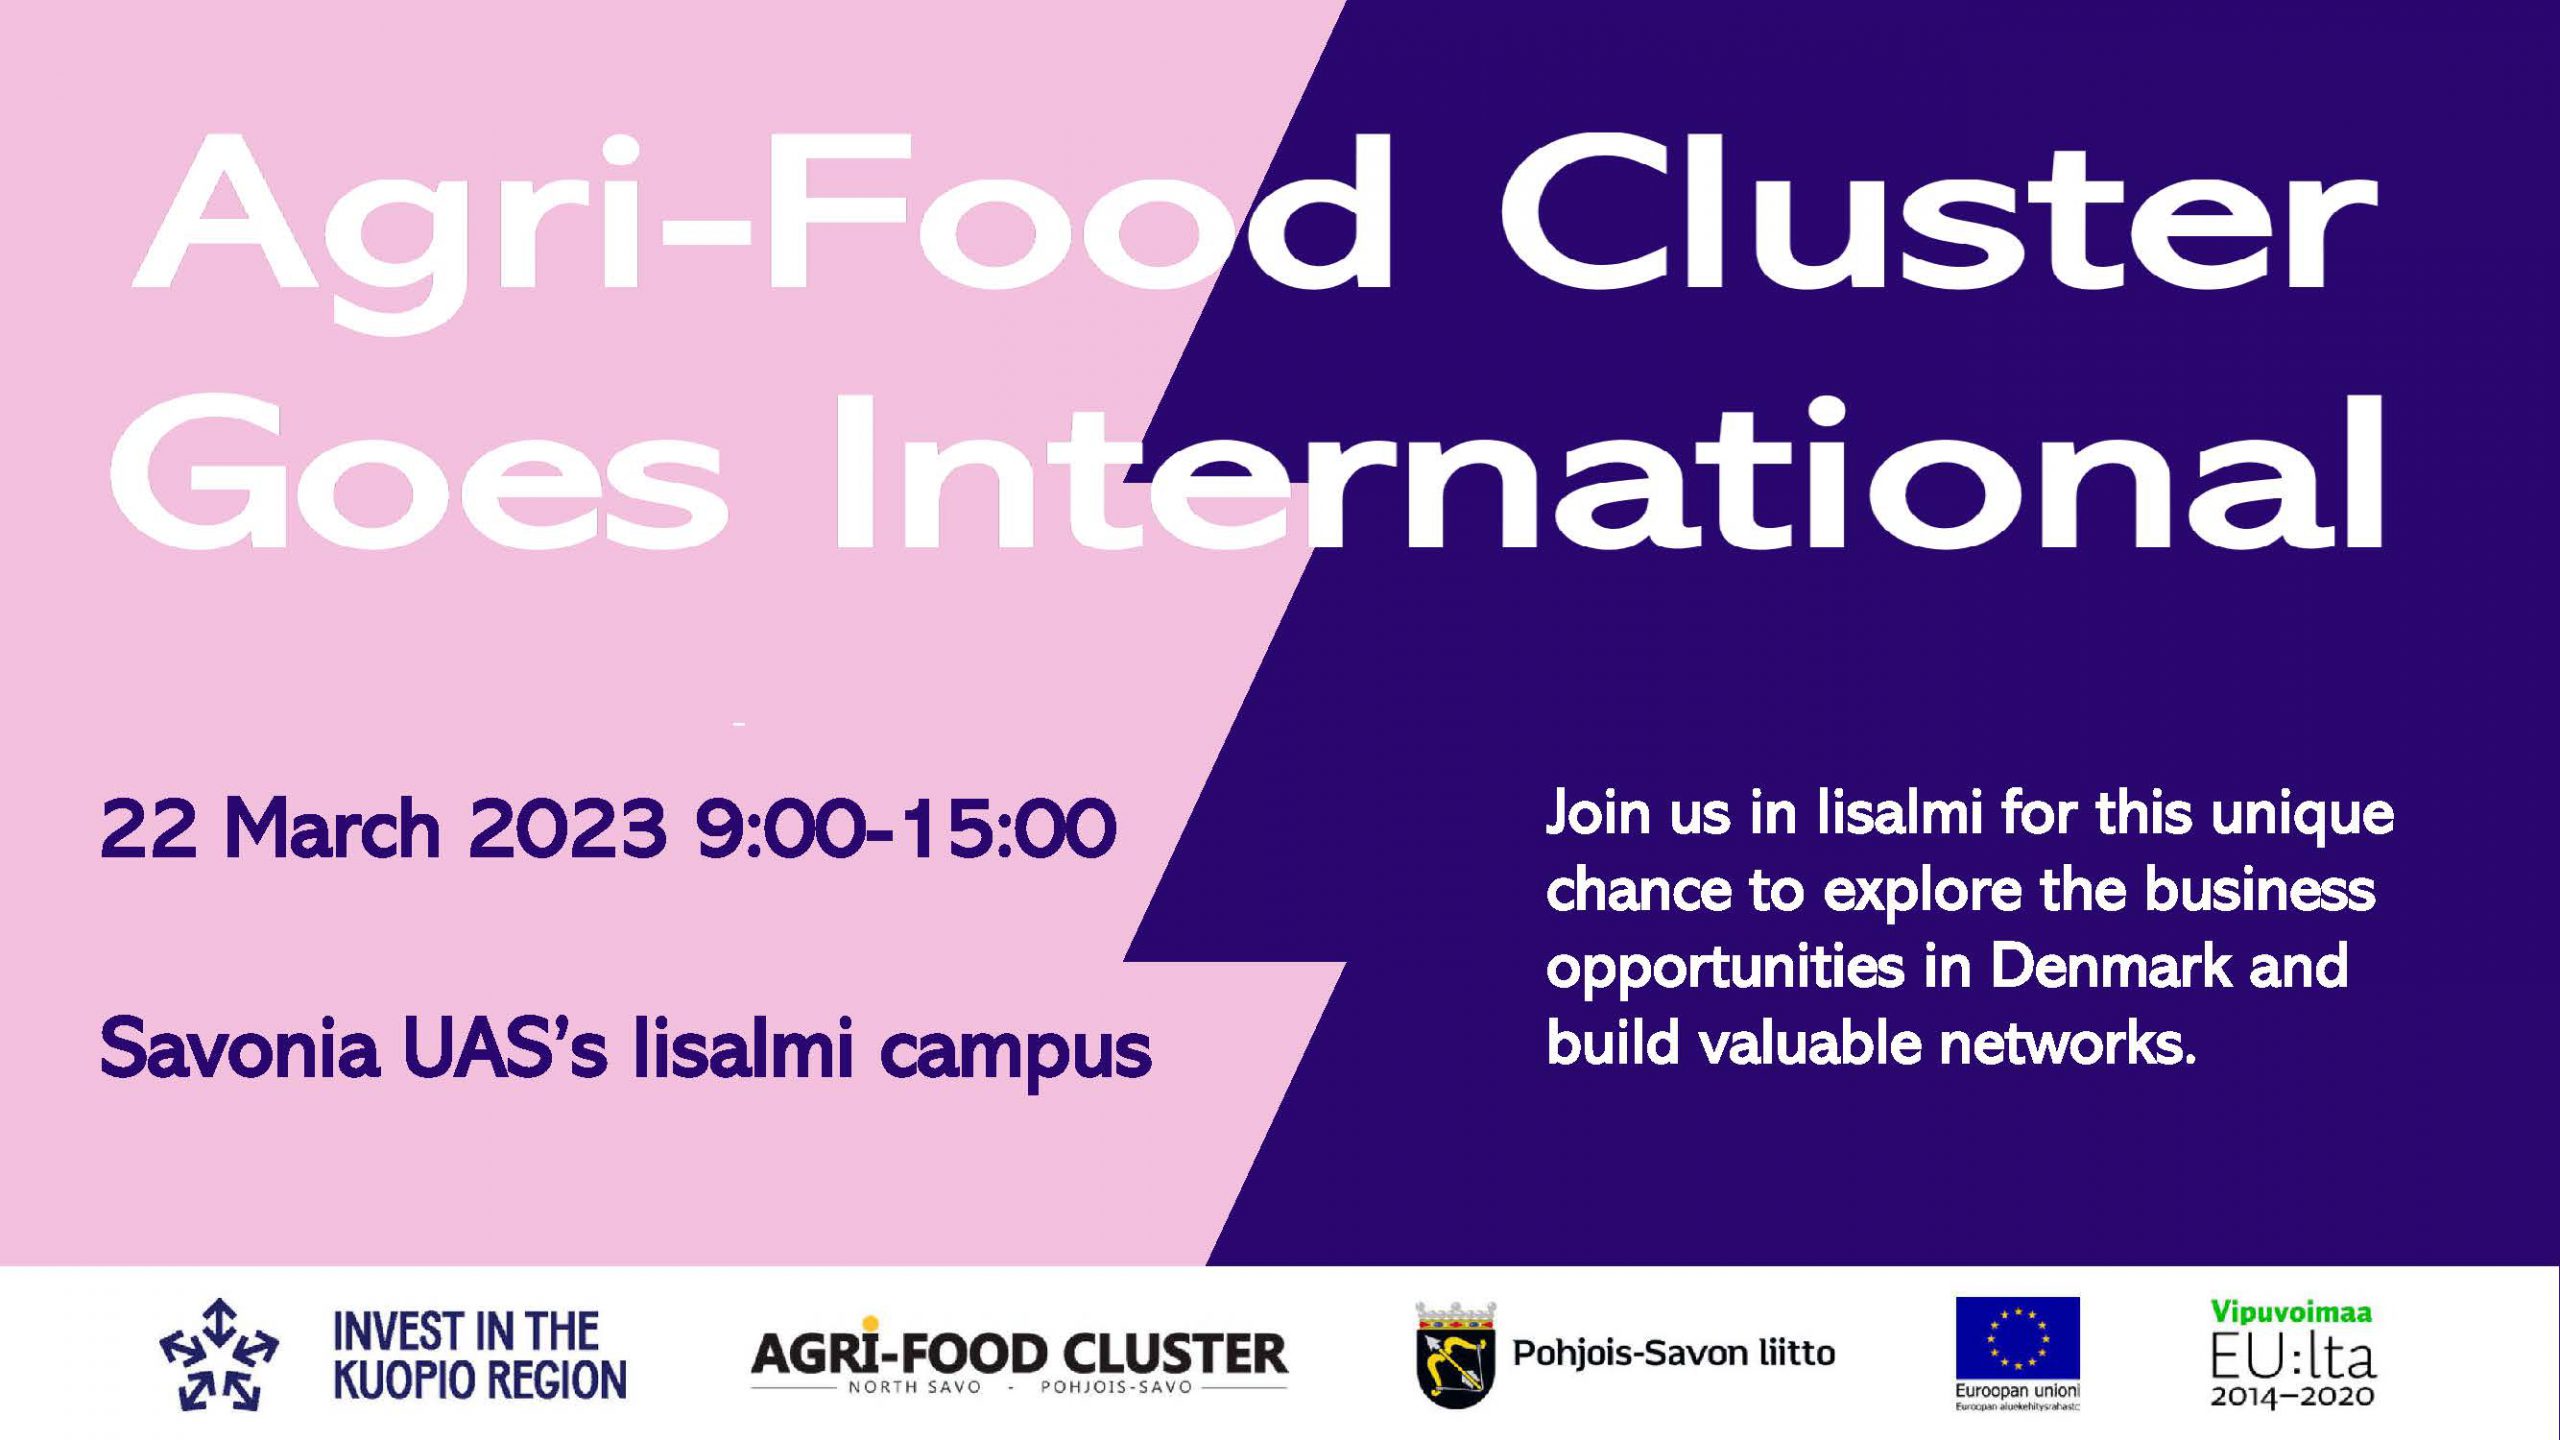 Agri-Food Cluster Goes International event invitation